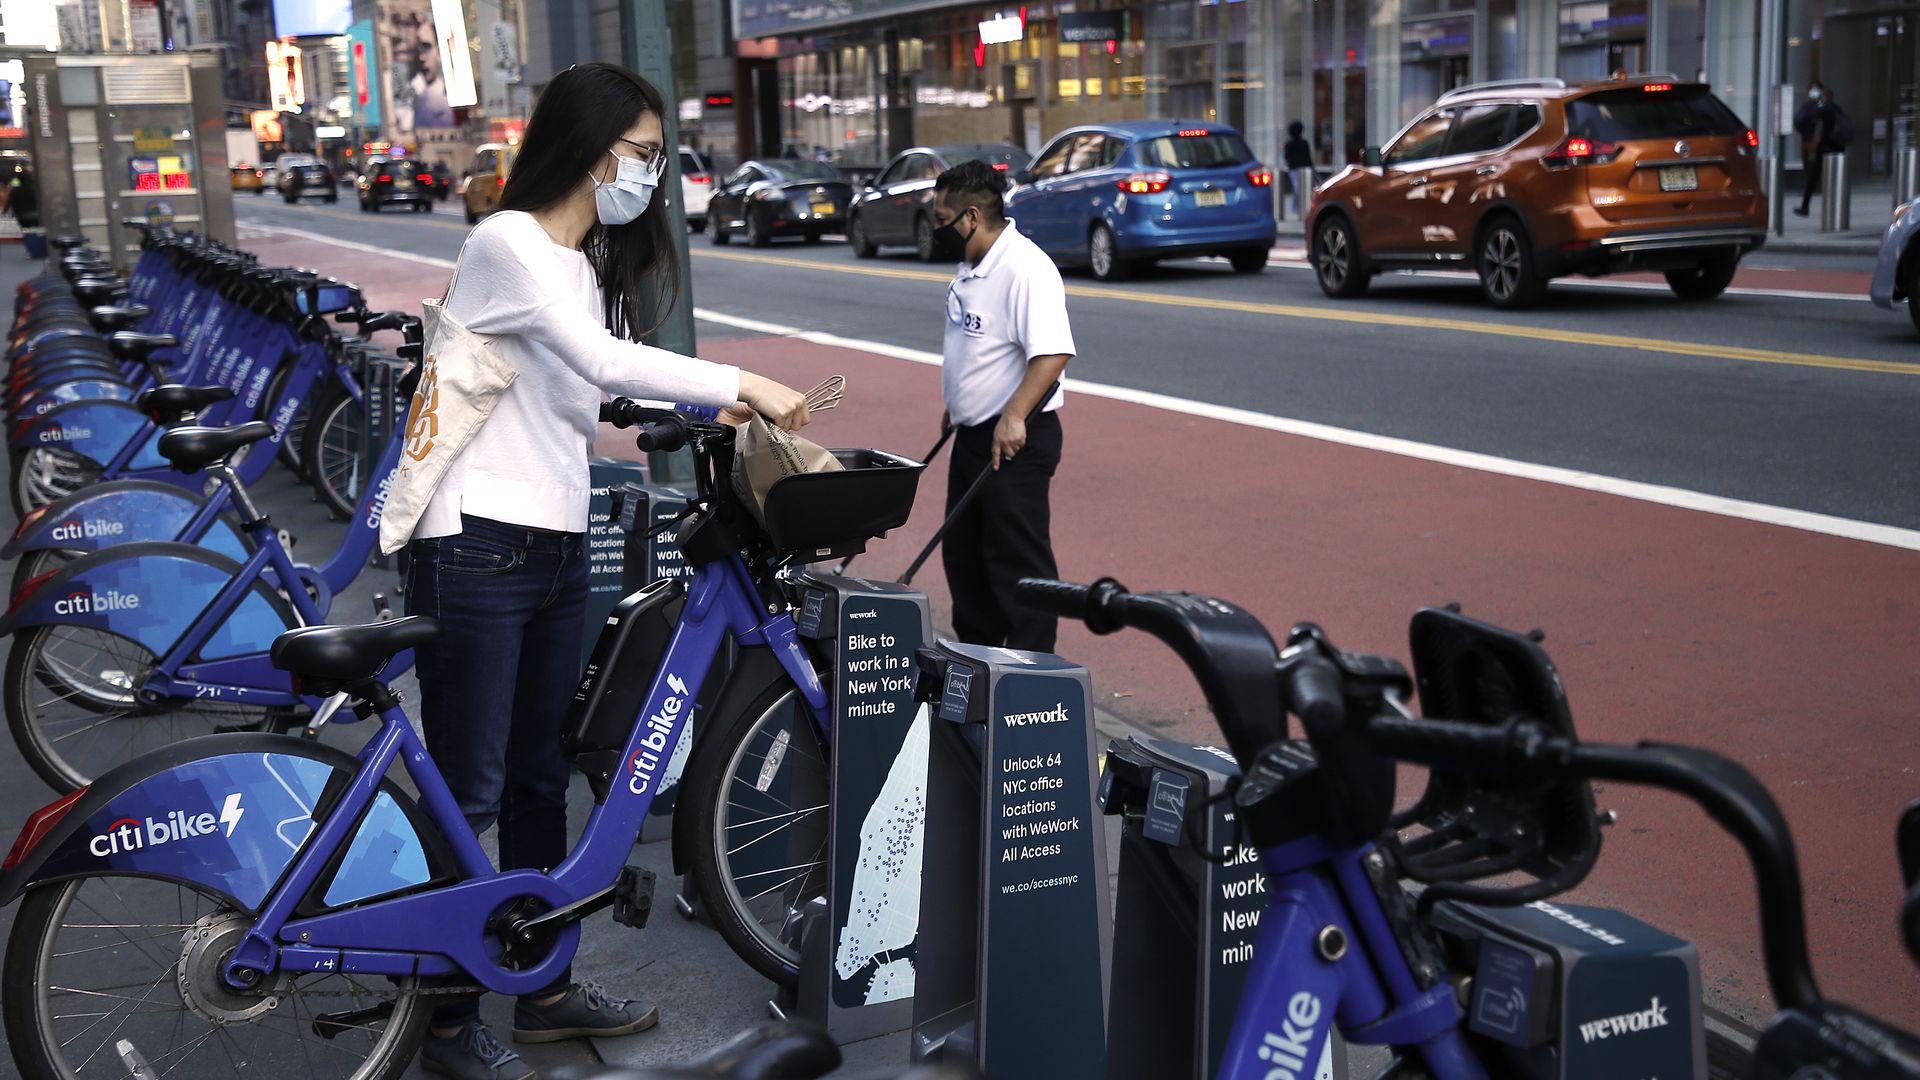 Citi Bike: NYC's Most Popular Bike Rental Program, Citi Bike NYC